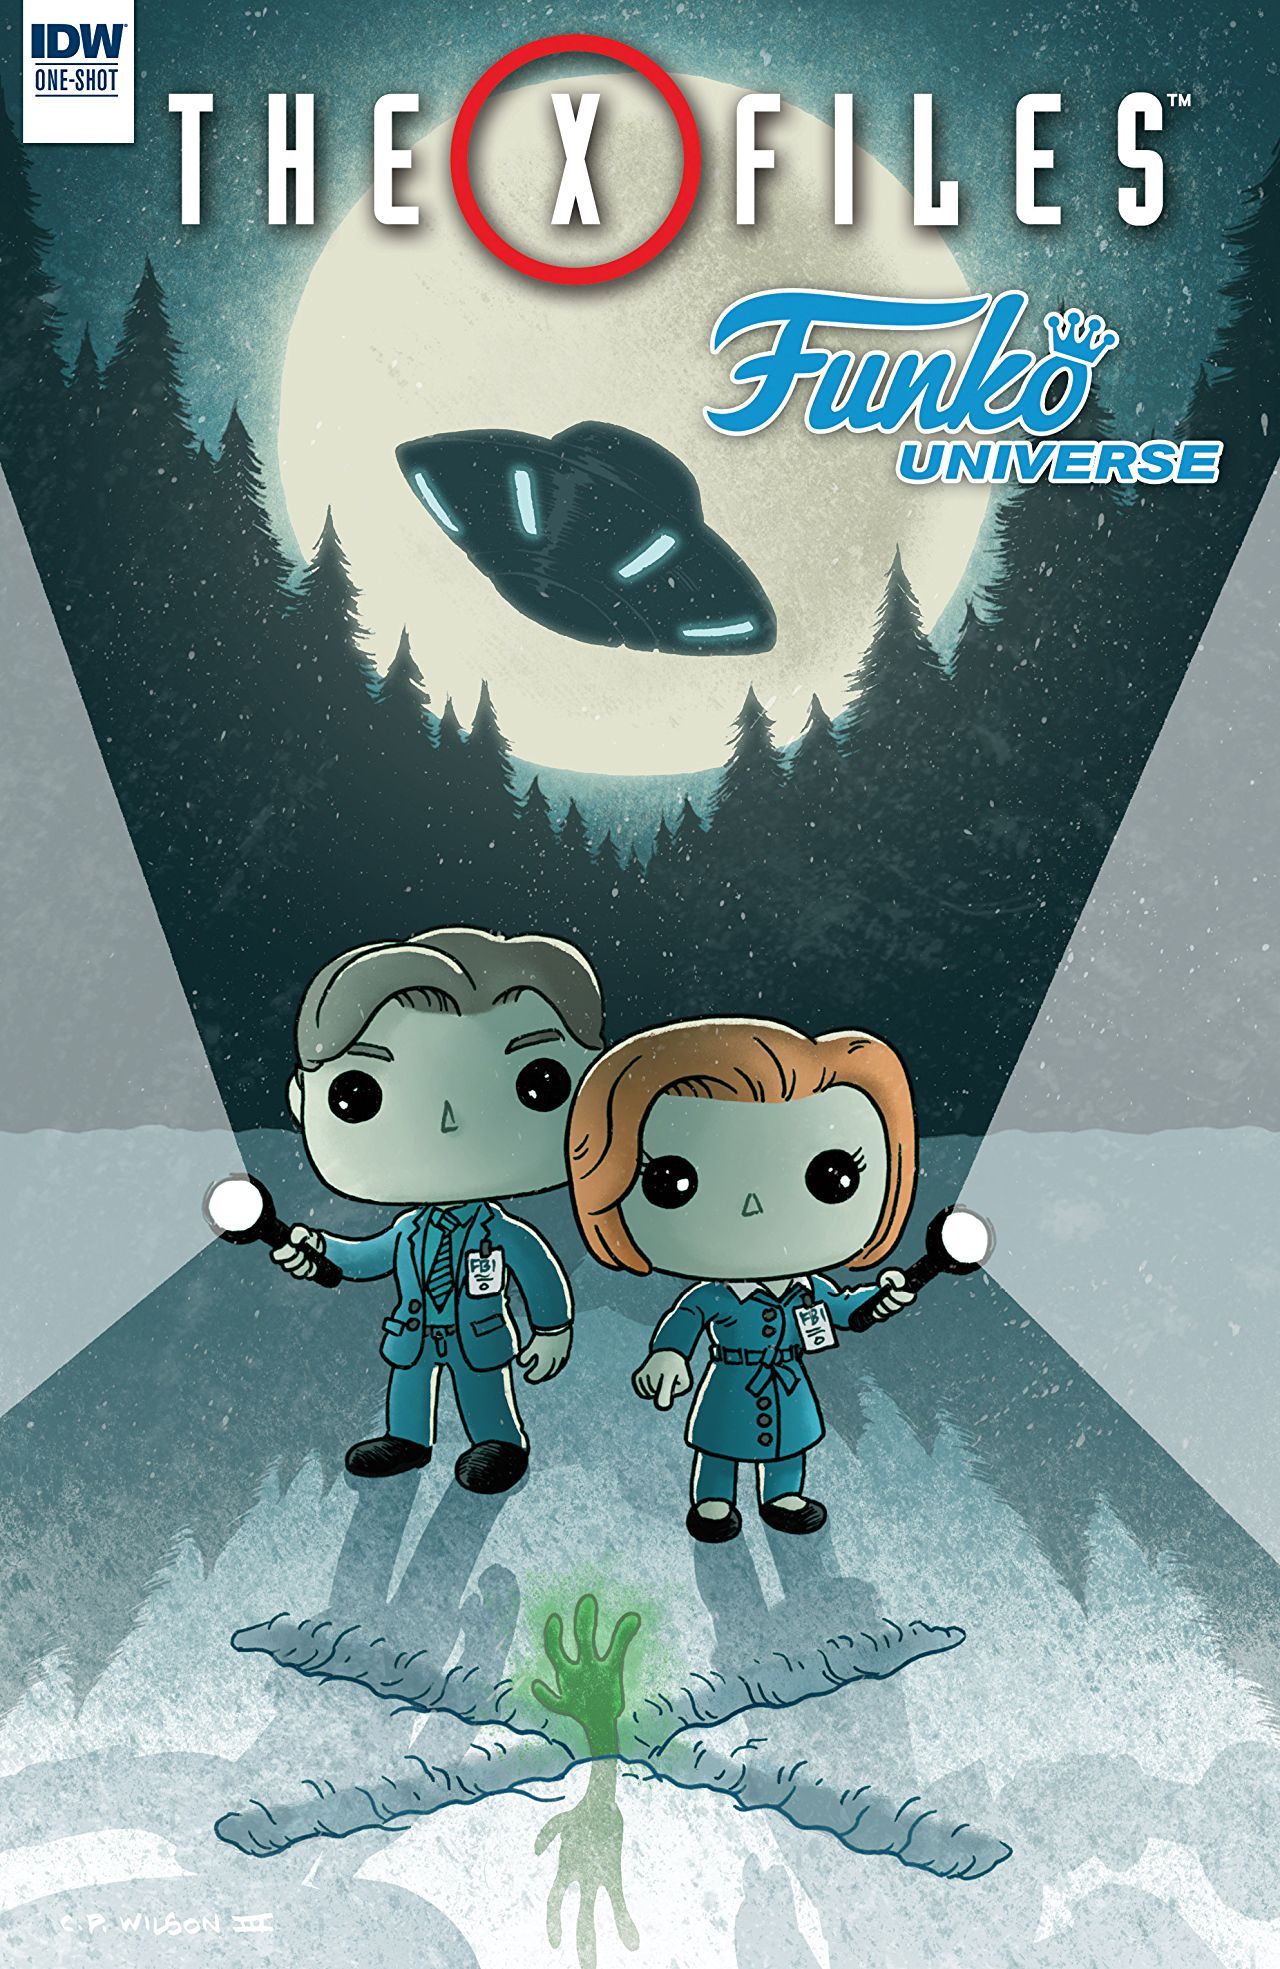 The X-Files: Funko Universe Review